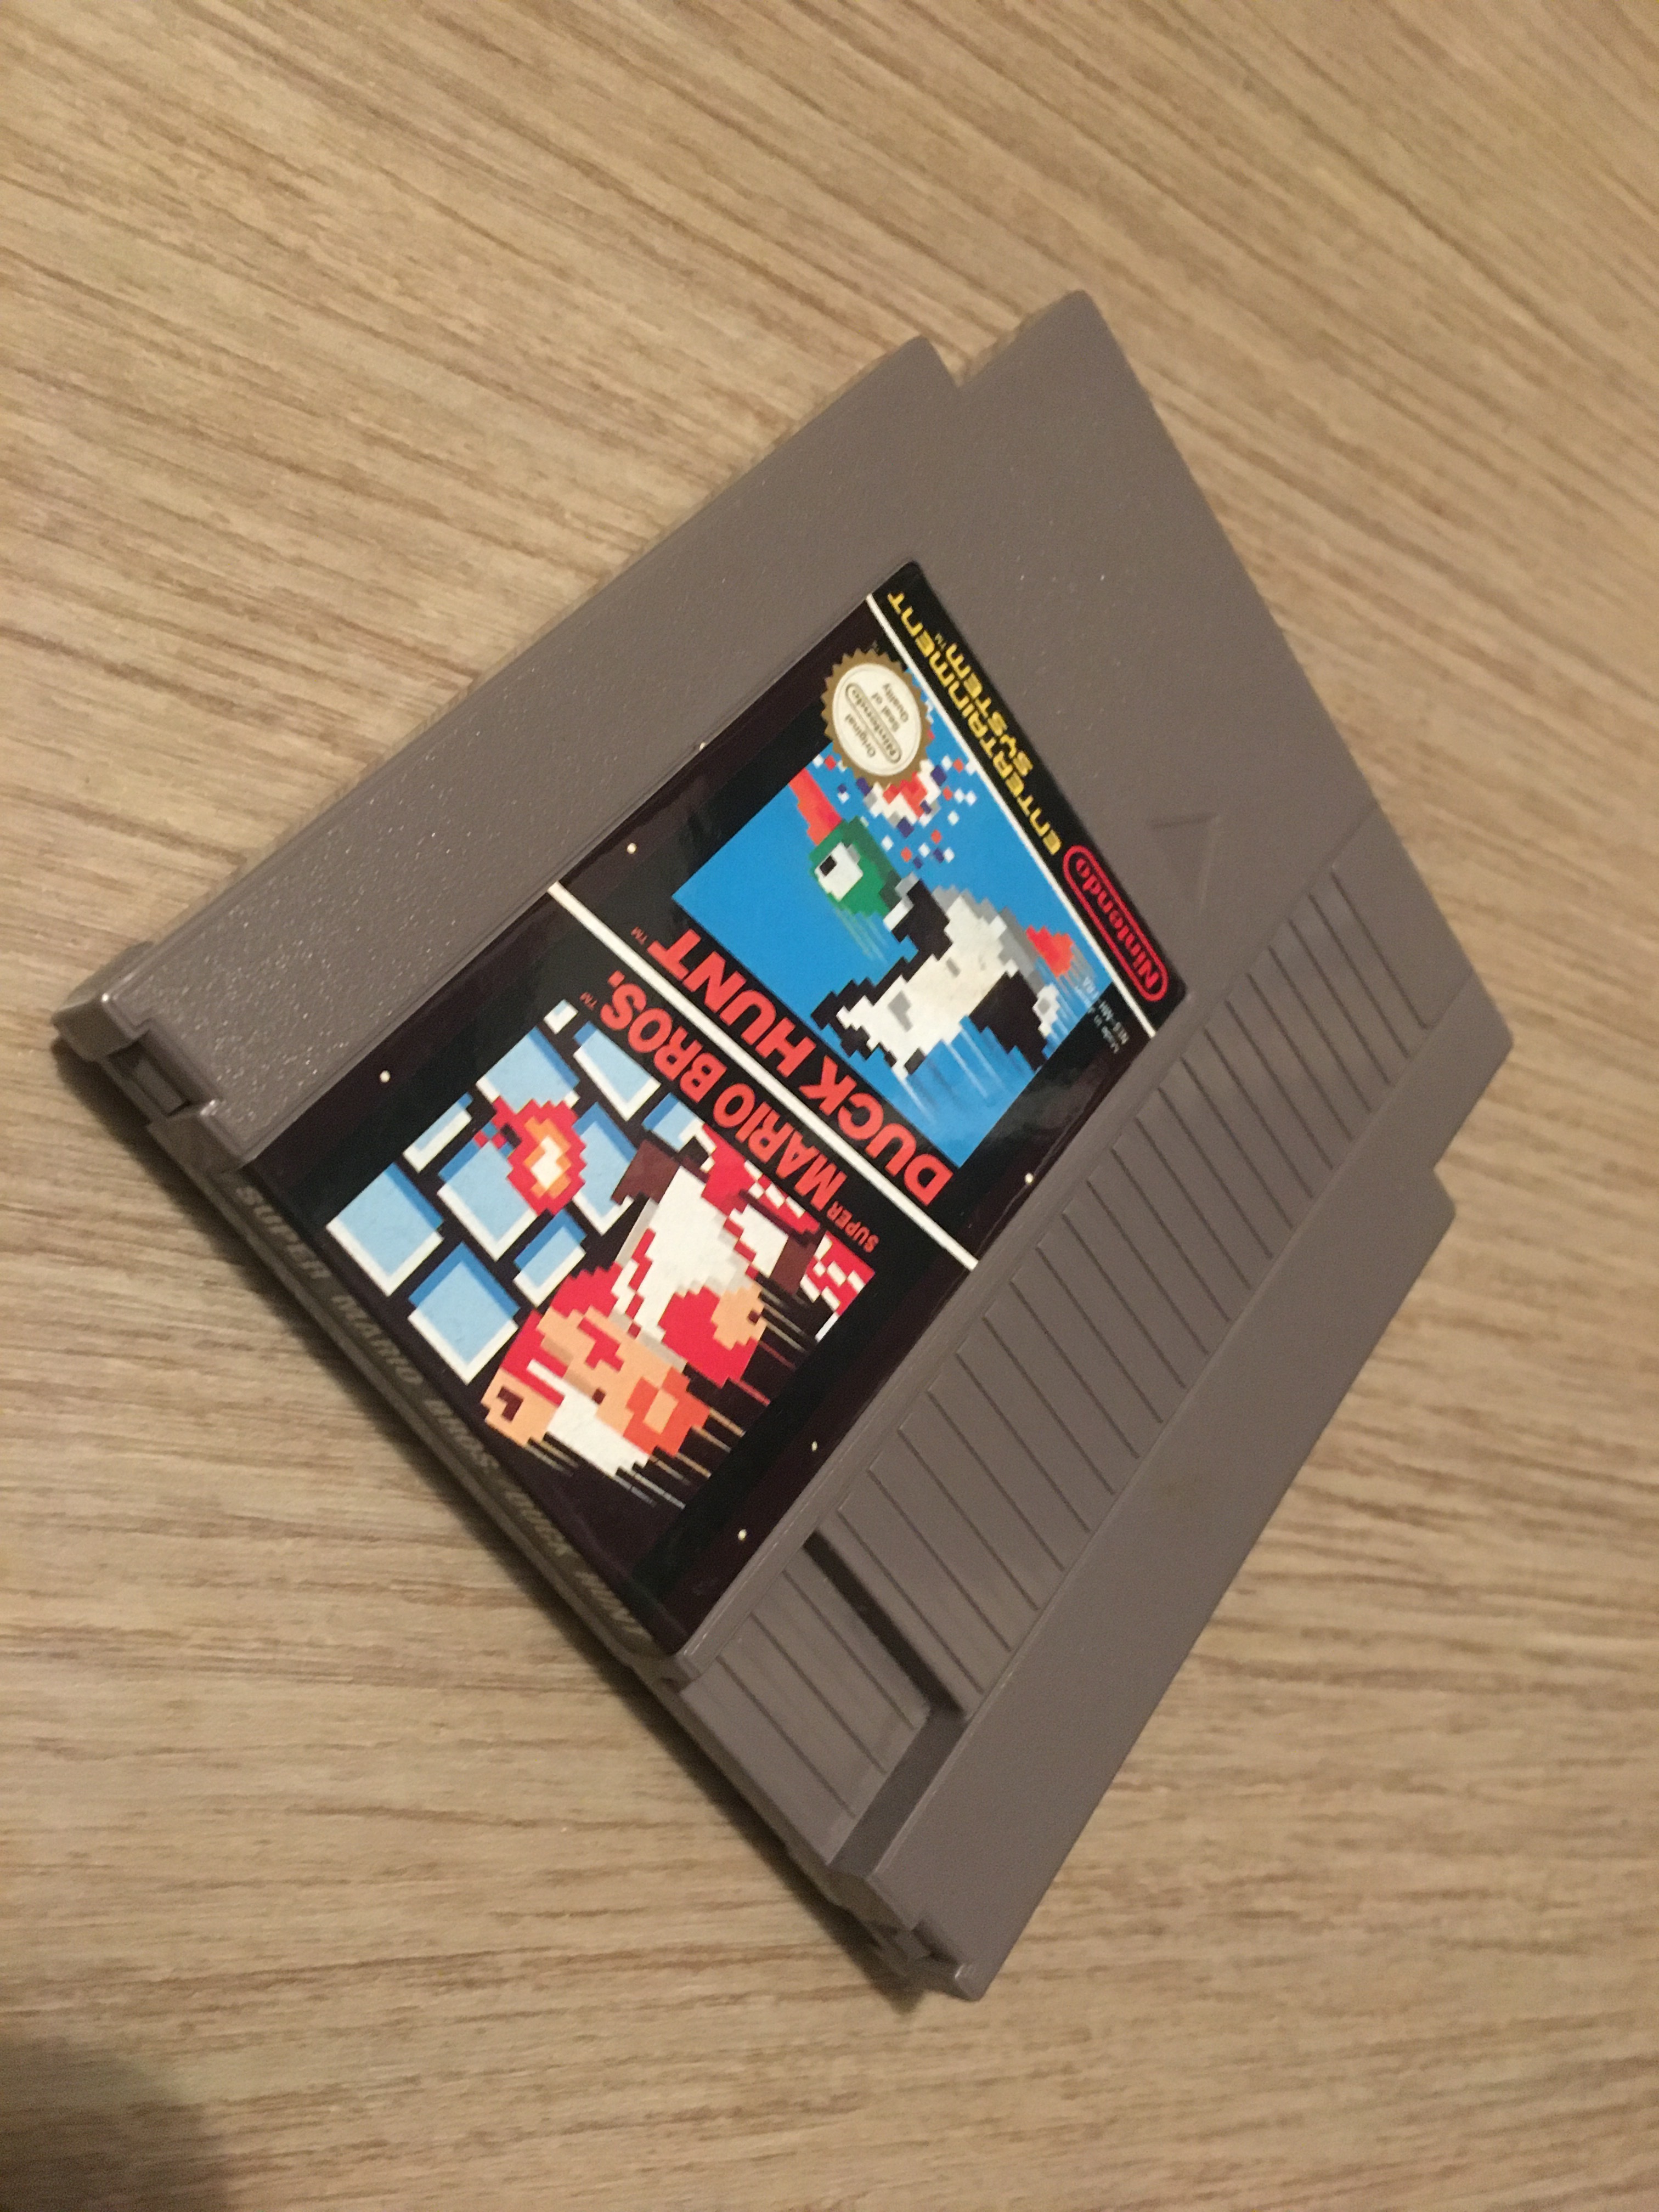 [VDS] Console NES FRA en loose avec deux manettes et Duckhunt/Mario V4qe